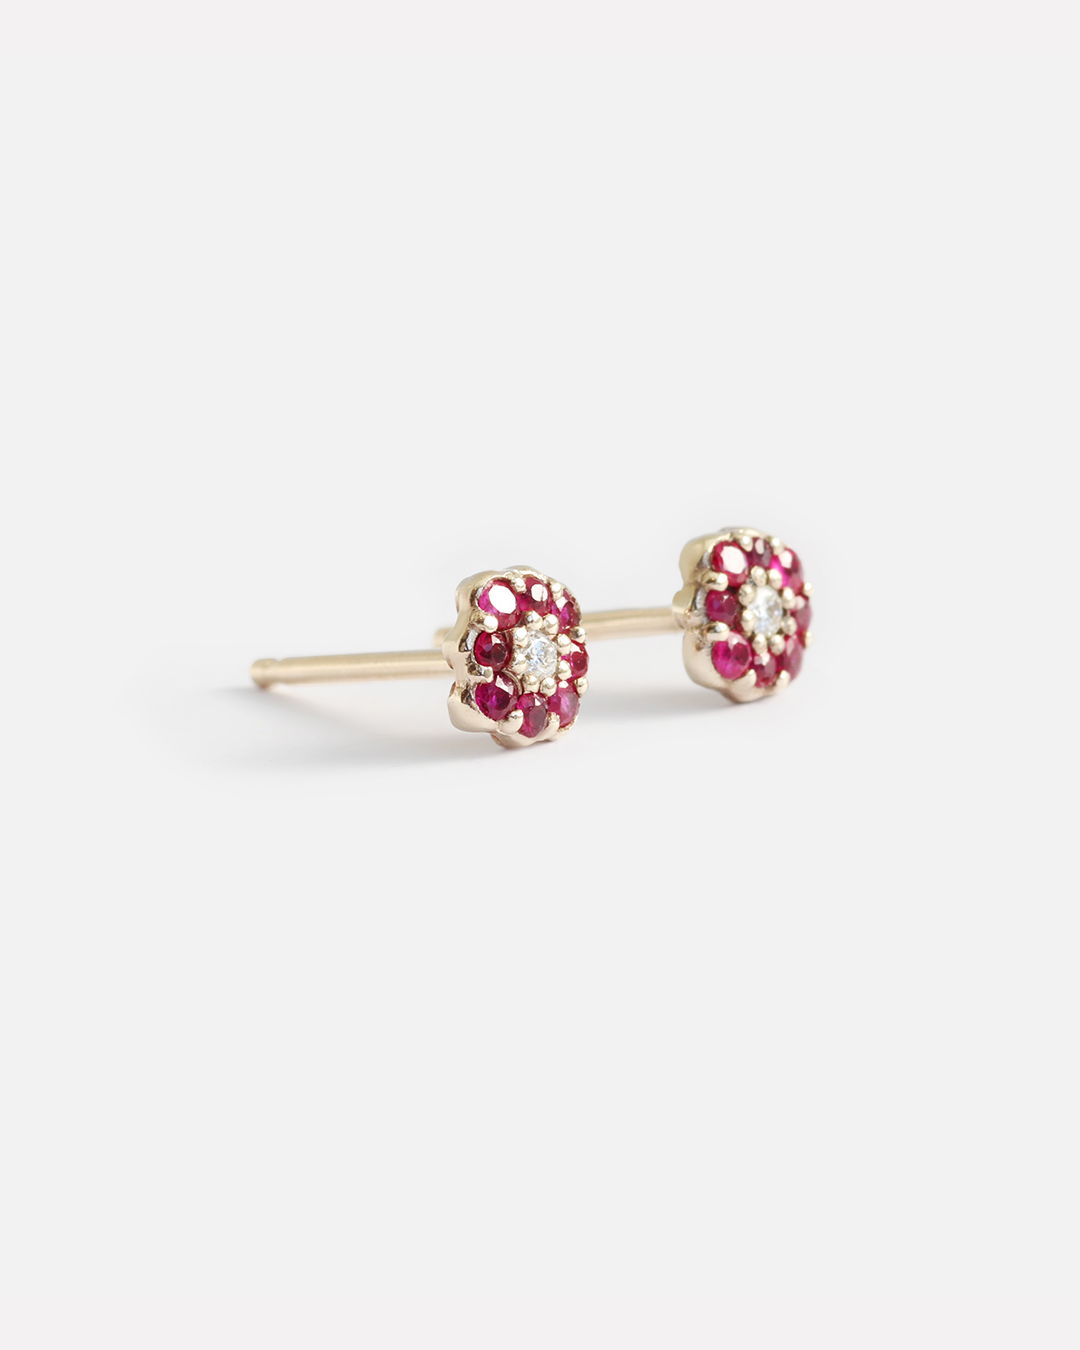 Flower Cluster / Ruby Studs By fitzgerald jewelry in earrings Category